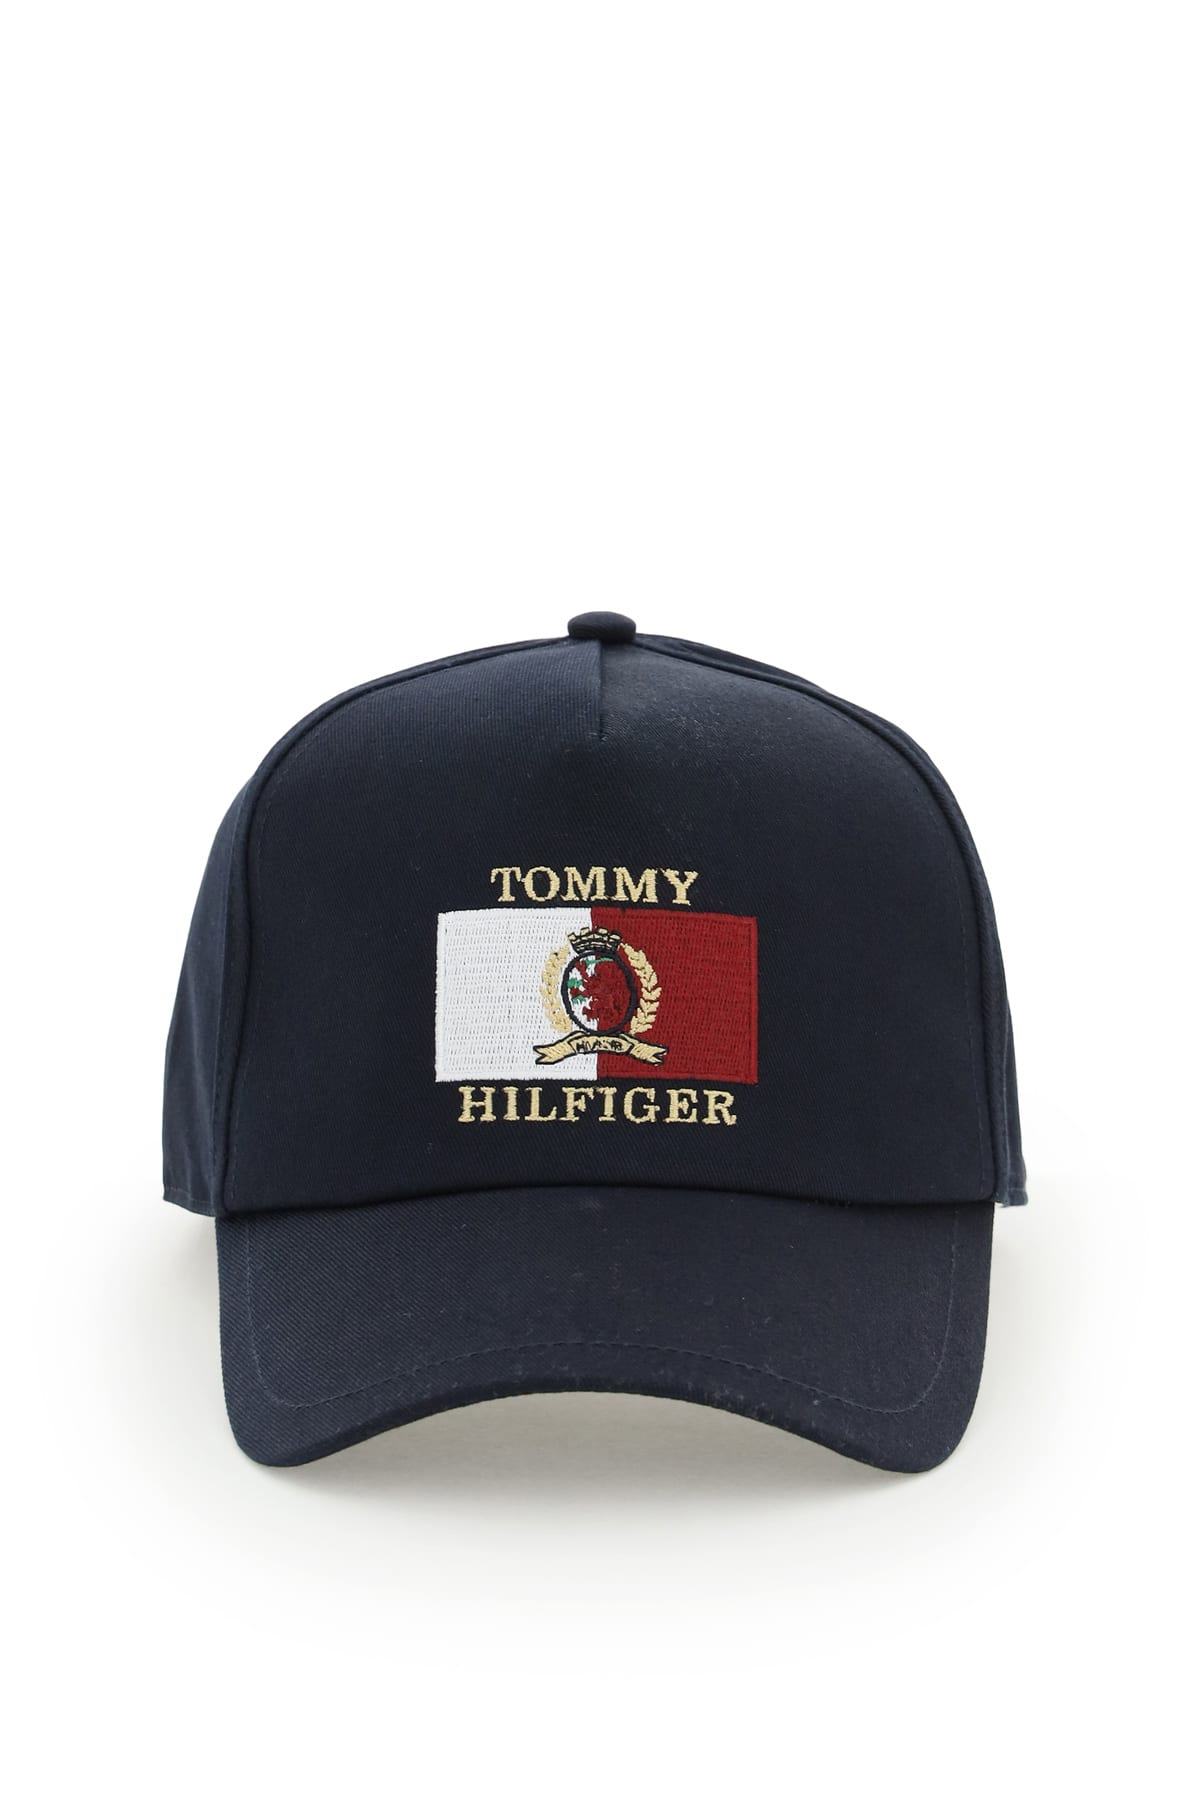 Tommy Hilfiger Baseball Cap With Emblem And Logo